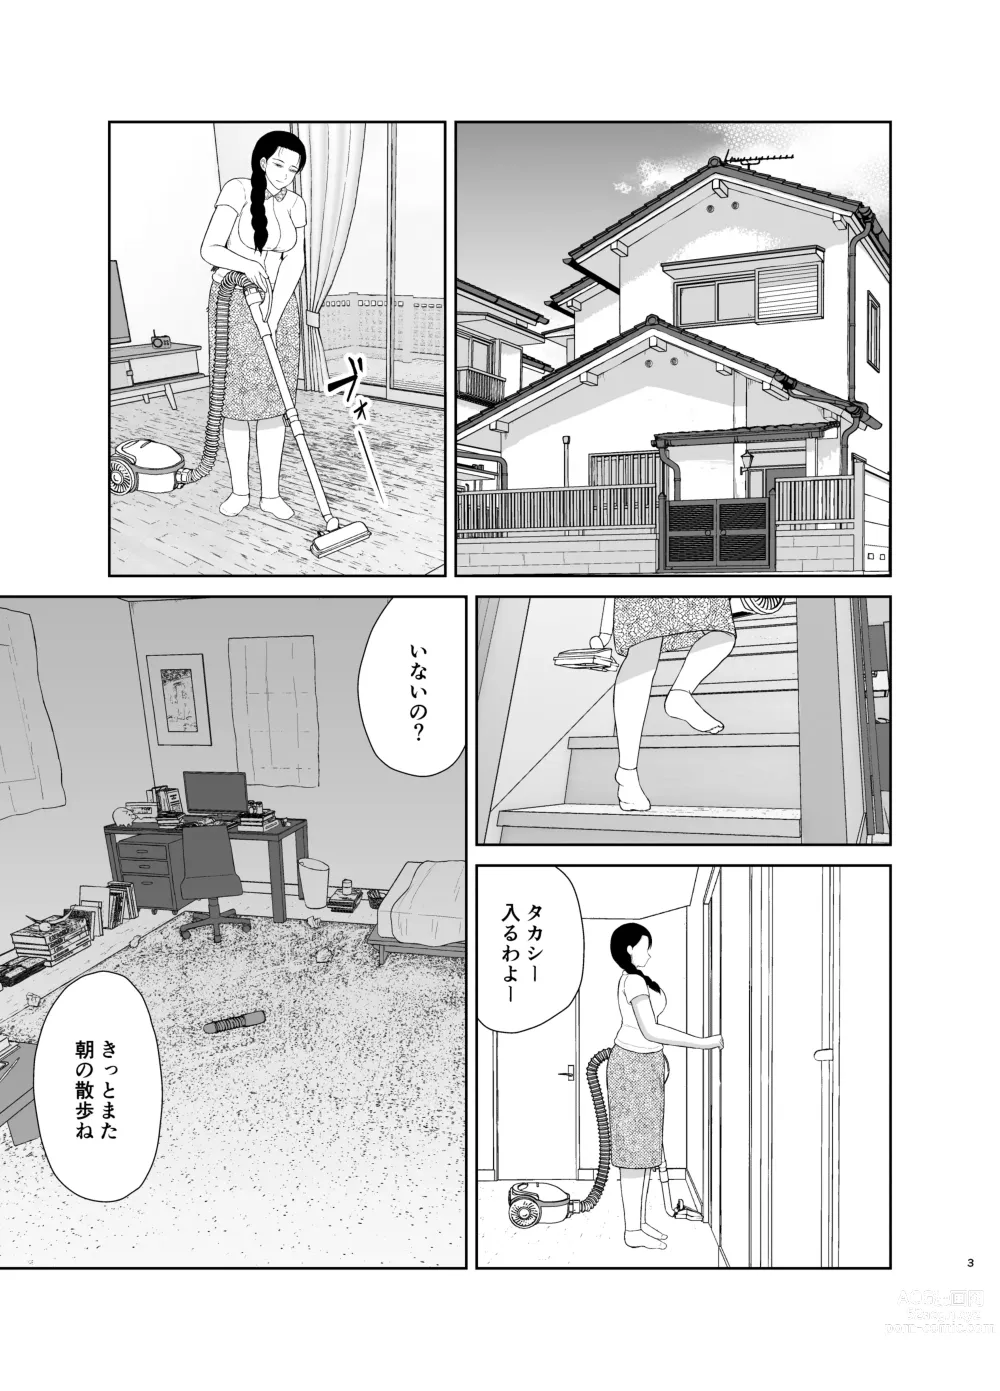 Page 3 of doujinshi Haha wa Omocha 1